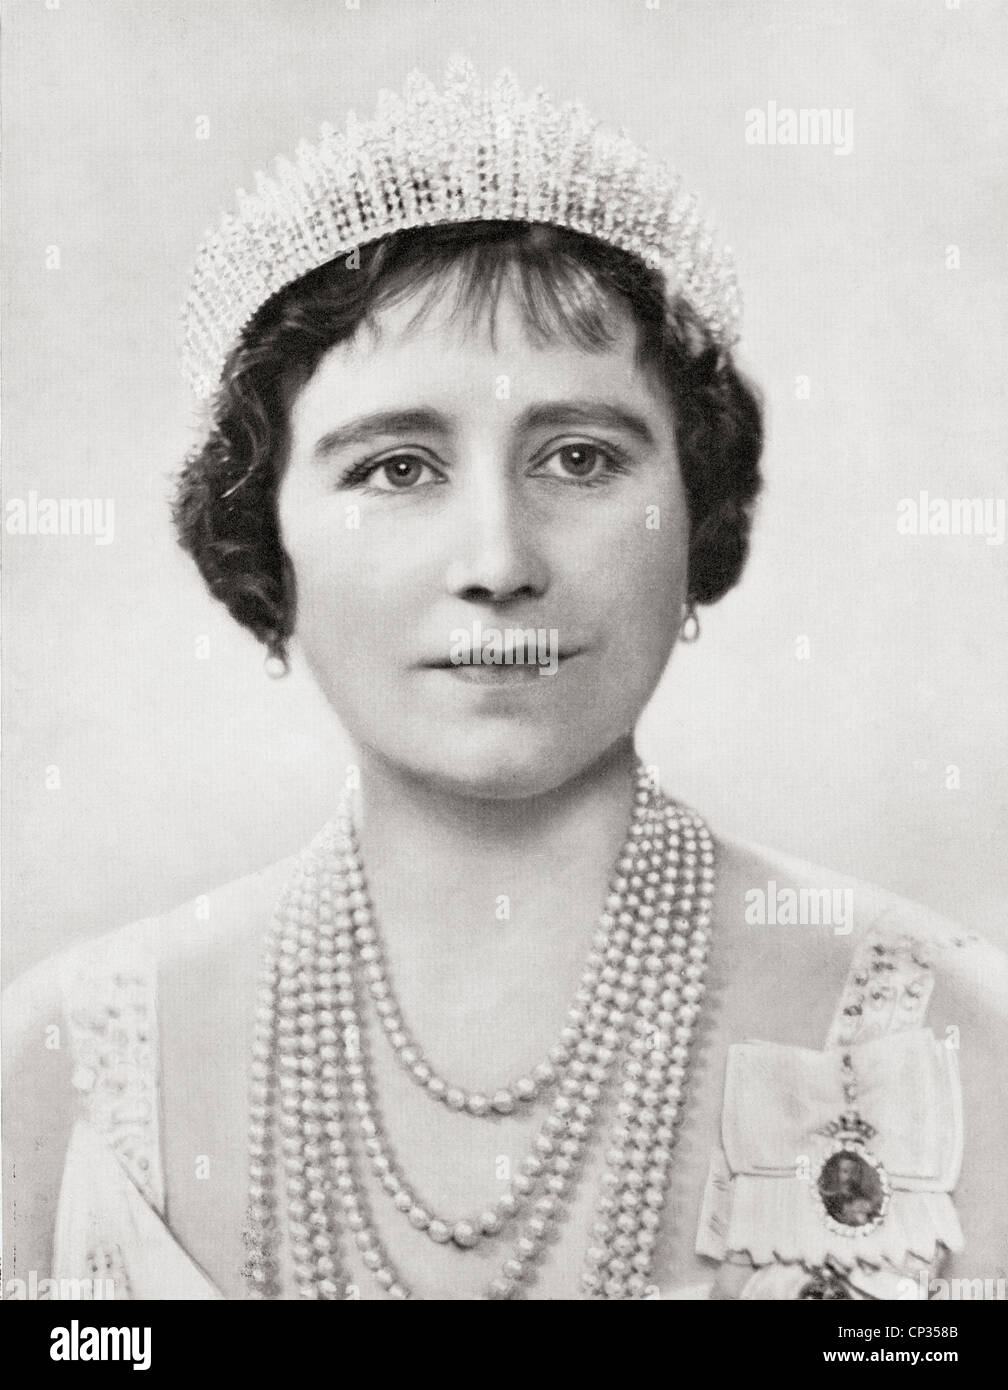 La regina Elisabetta, la Regina Madre. Elizabeth Angela Marguerite Bowes-Lyon, 1900 - 2002. Regina consorte del re George VI. Foto Stock